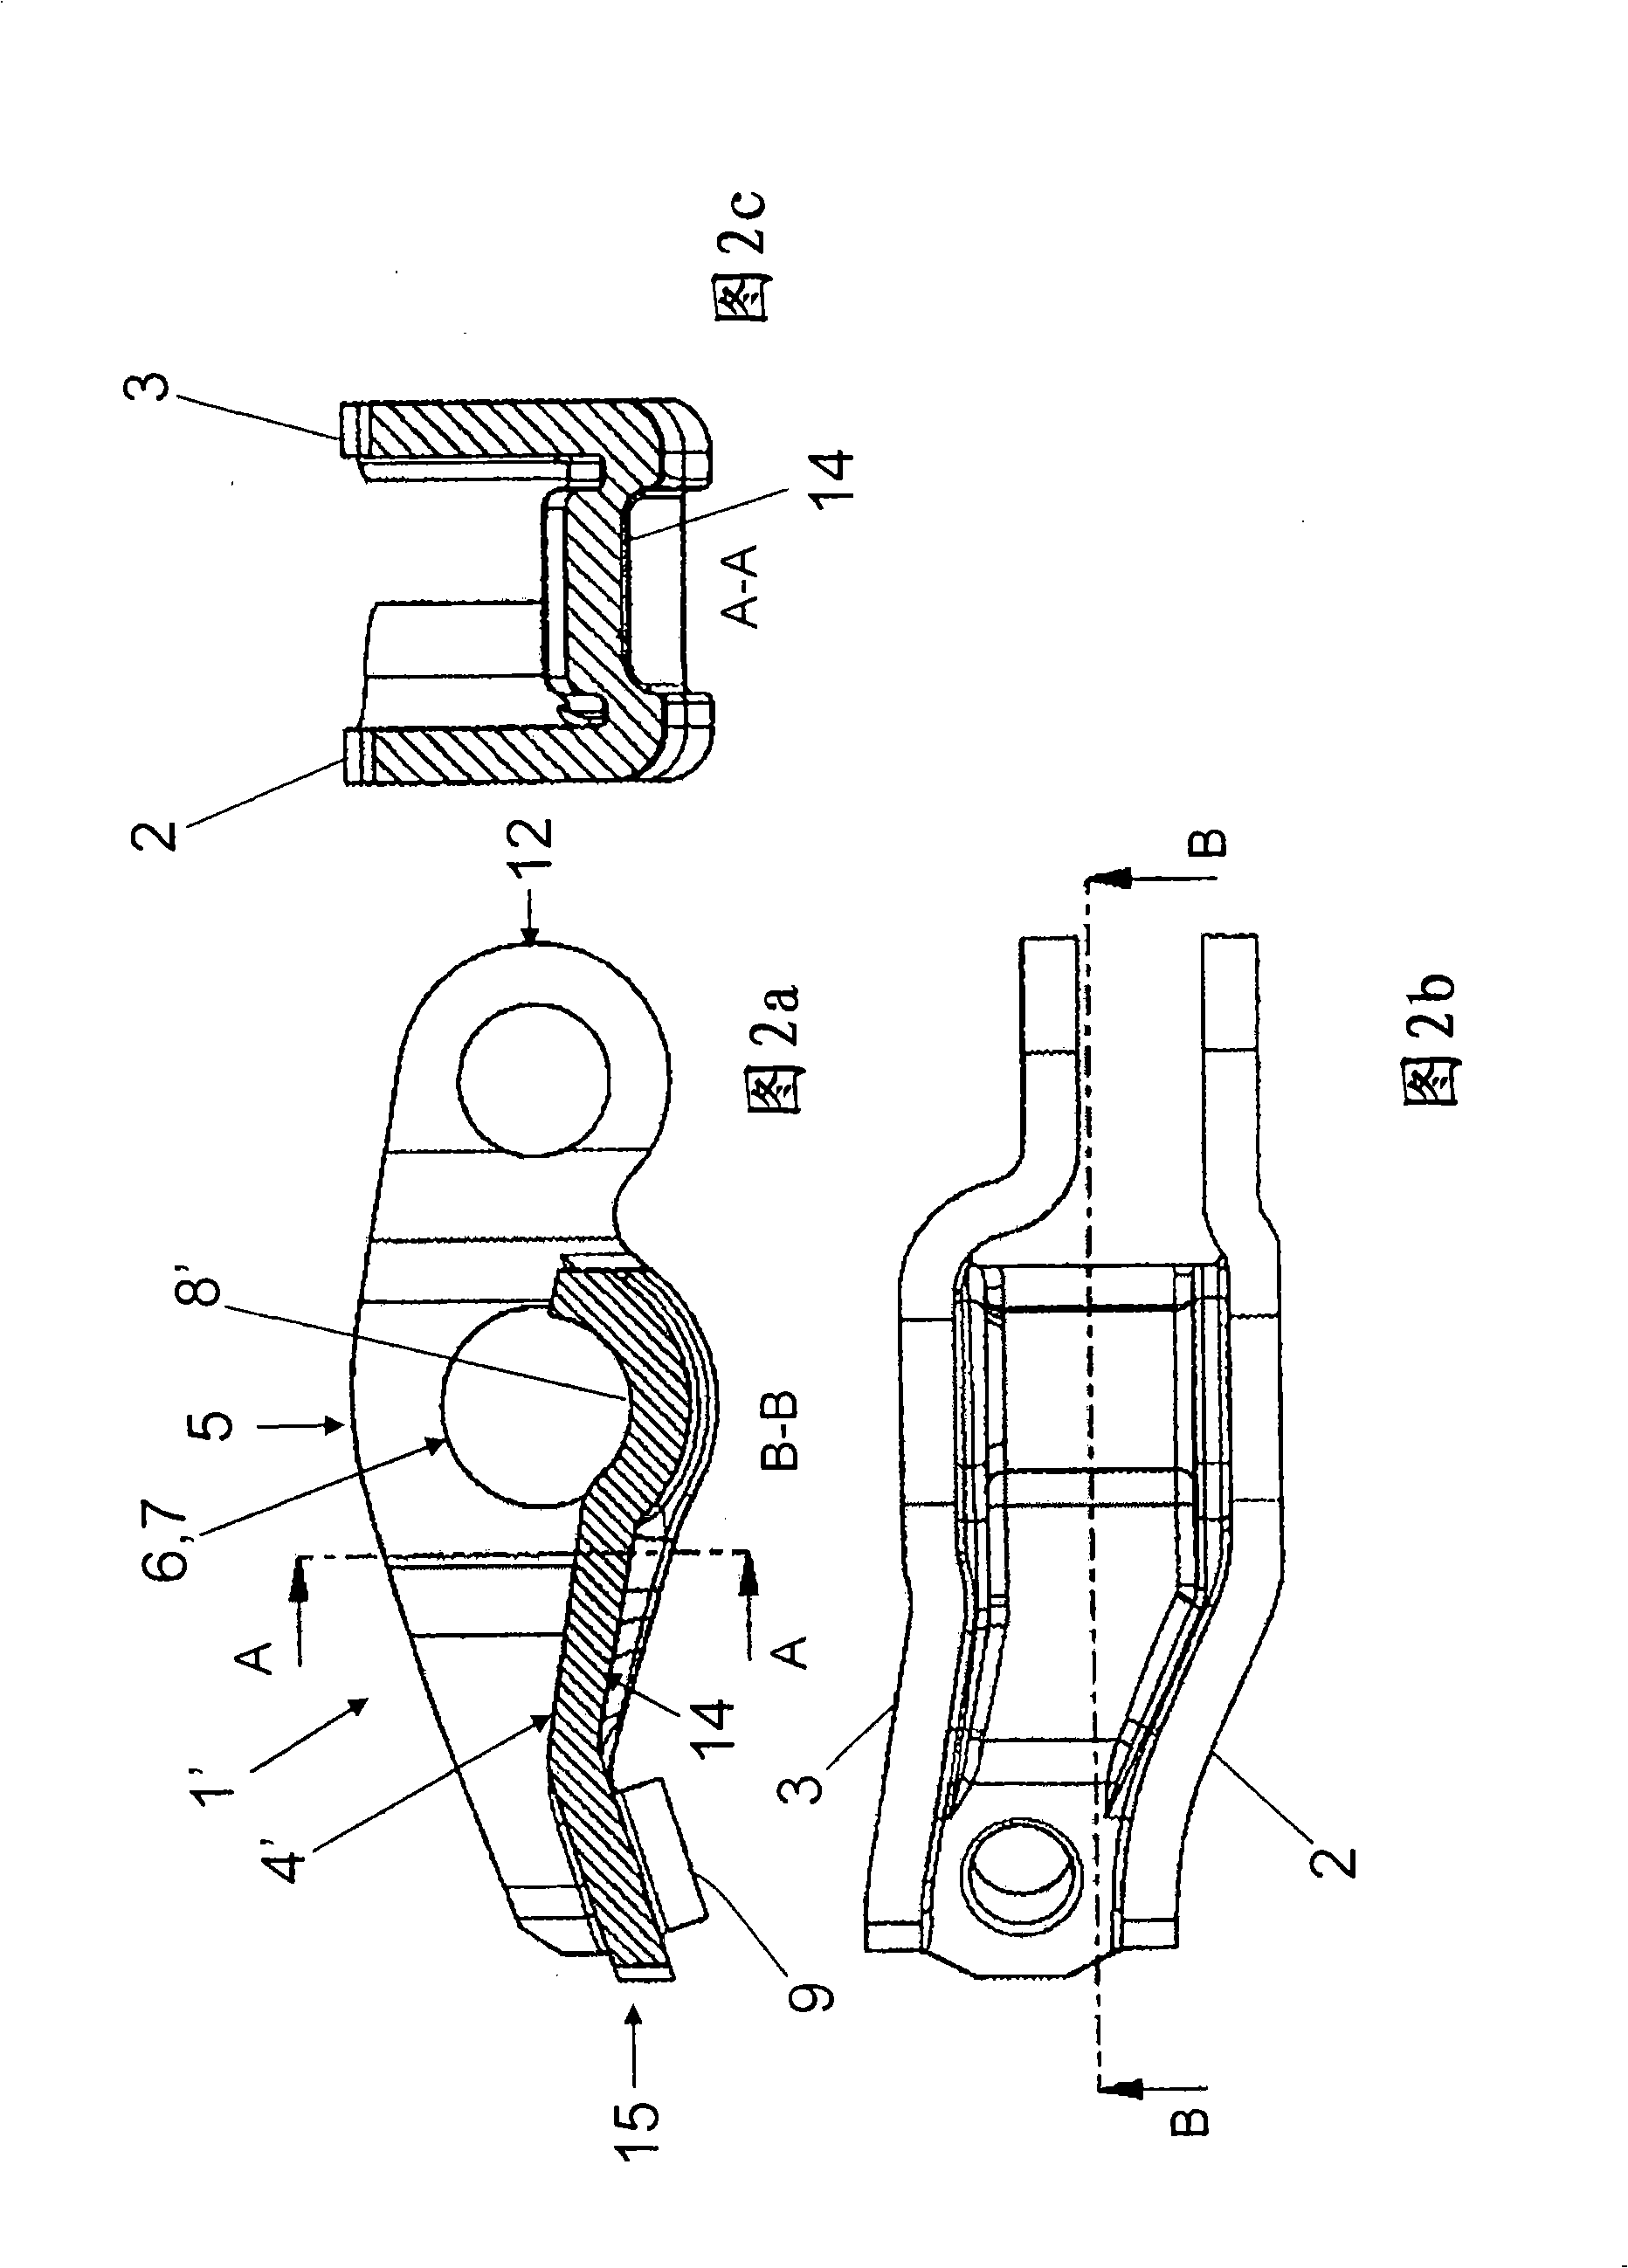 Rocker of internal combustion valve mechanism